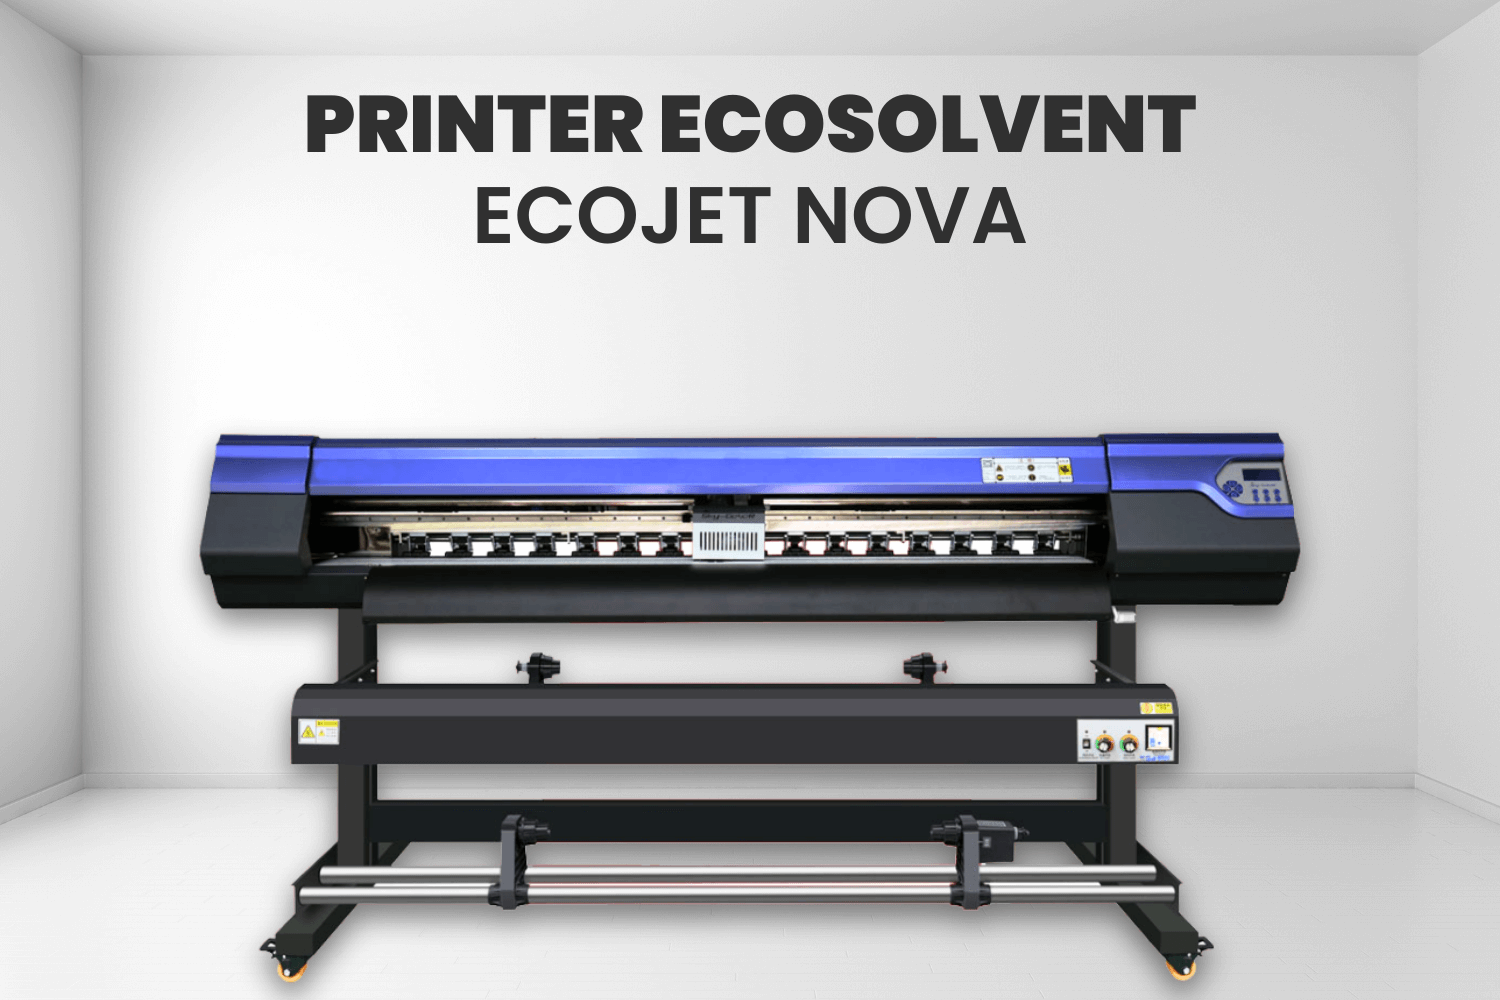 Printer Ecosolvent Ecojet Nova E1